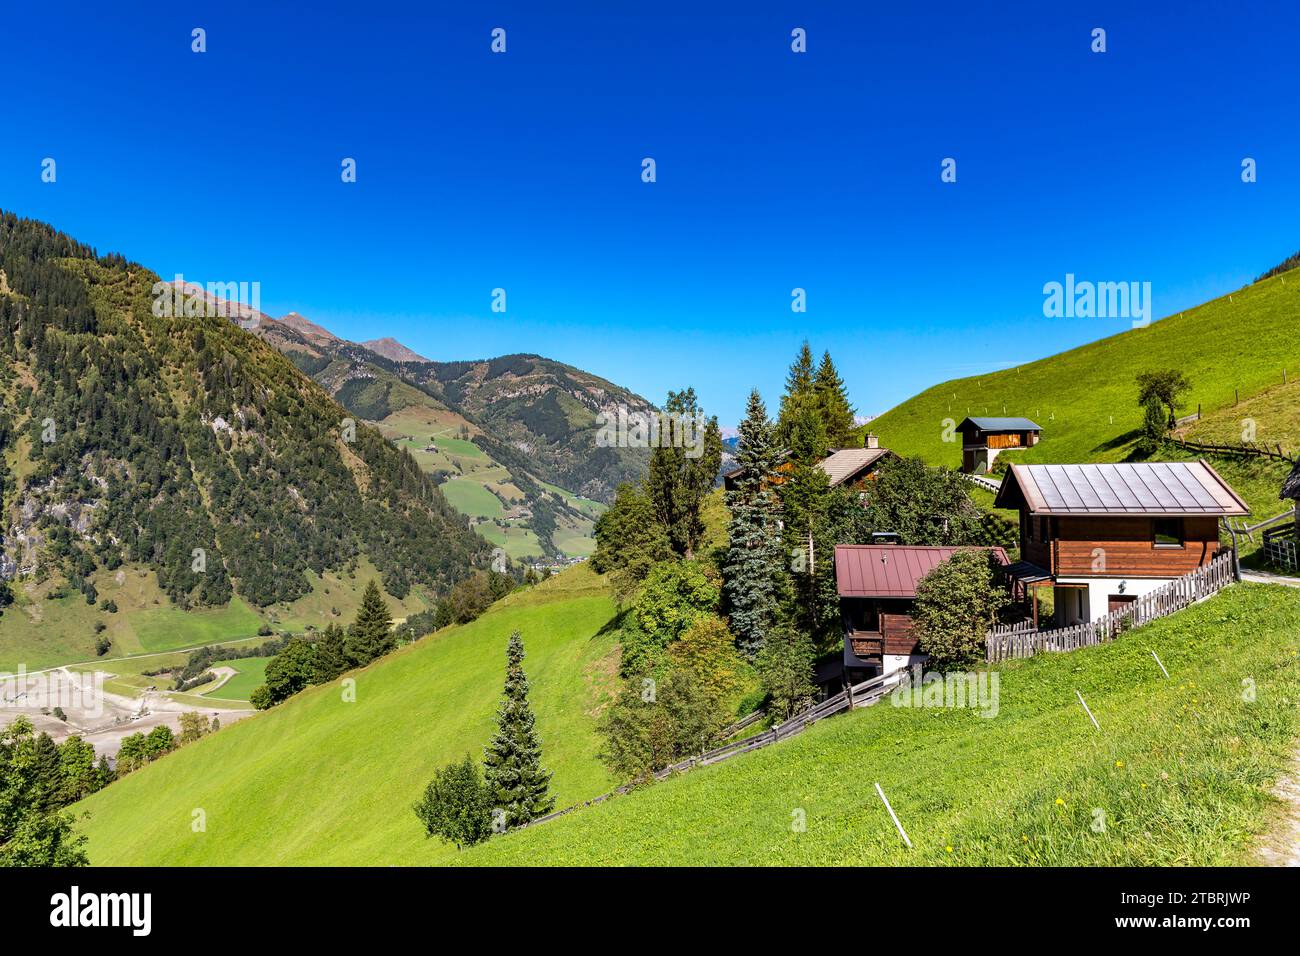 Maison de vacances Berghoamat, Fröstlberg dans la vallée du Rauris, derrière Schwarzwand, 2194 m, Hirschkopf, 2252 m, Baukogel, 2224 m, Rauris, Pinzgau, Salzburger Land, Autriche Banque D'Images